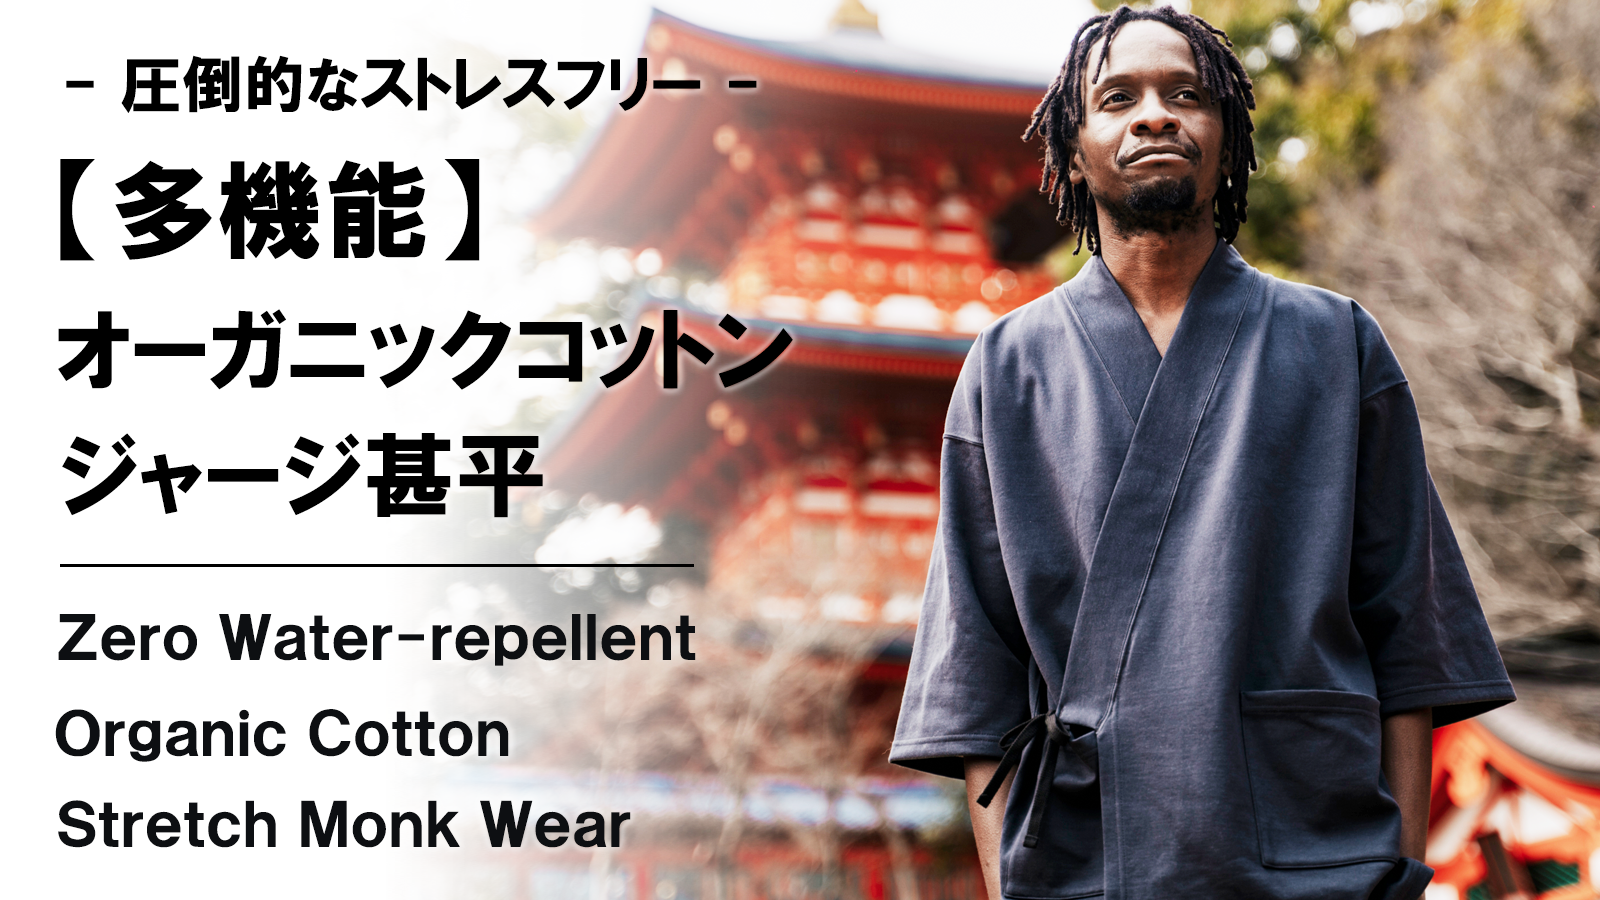 New Makuake Project【優しい肌触りのリラックスウェア。夏を快適にする【多機能】オーガニックコットン甚平】